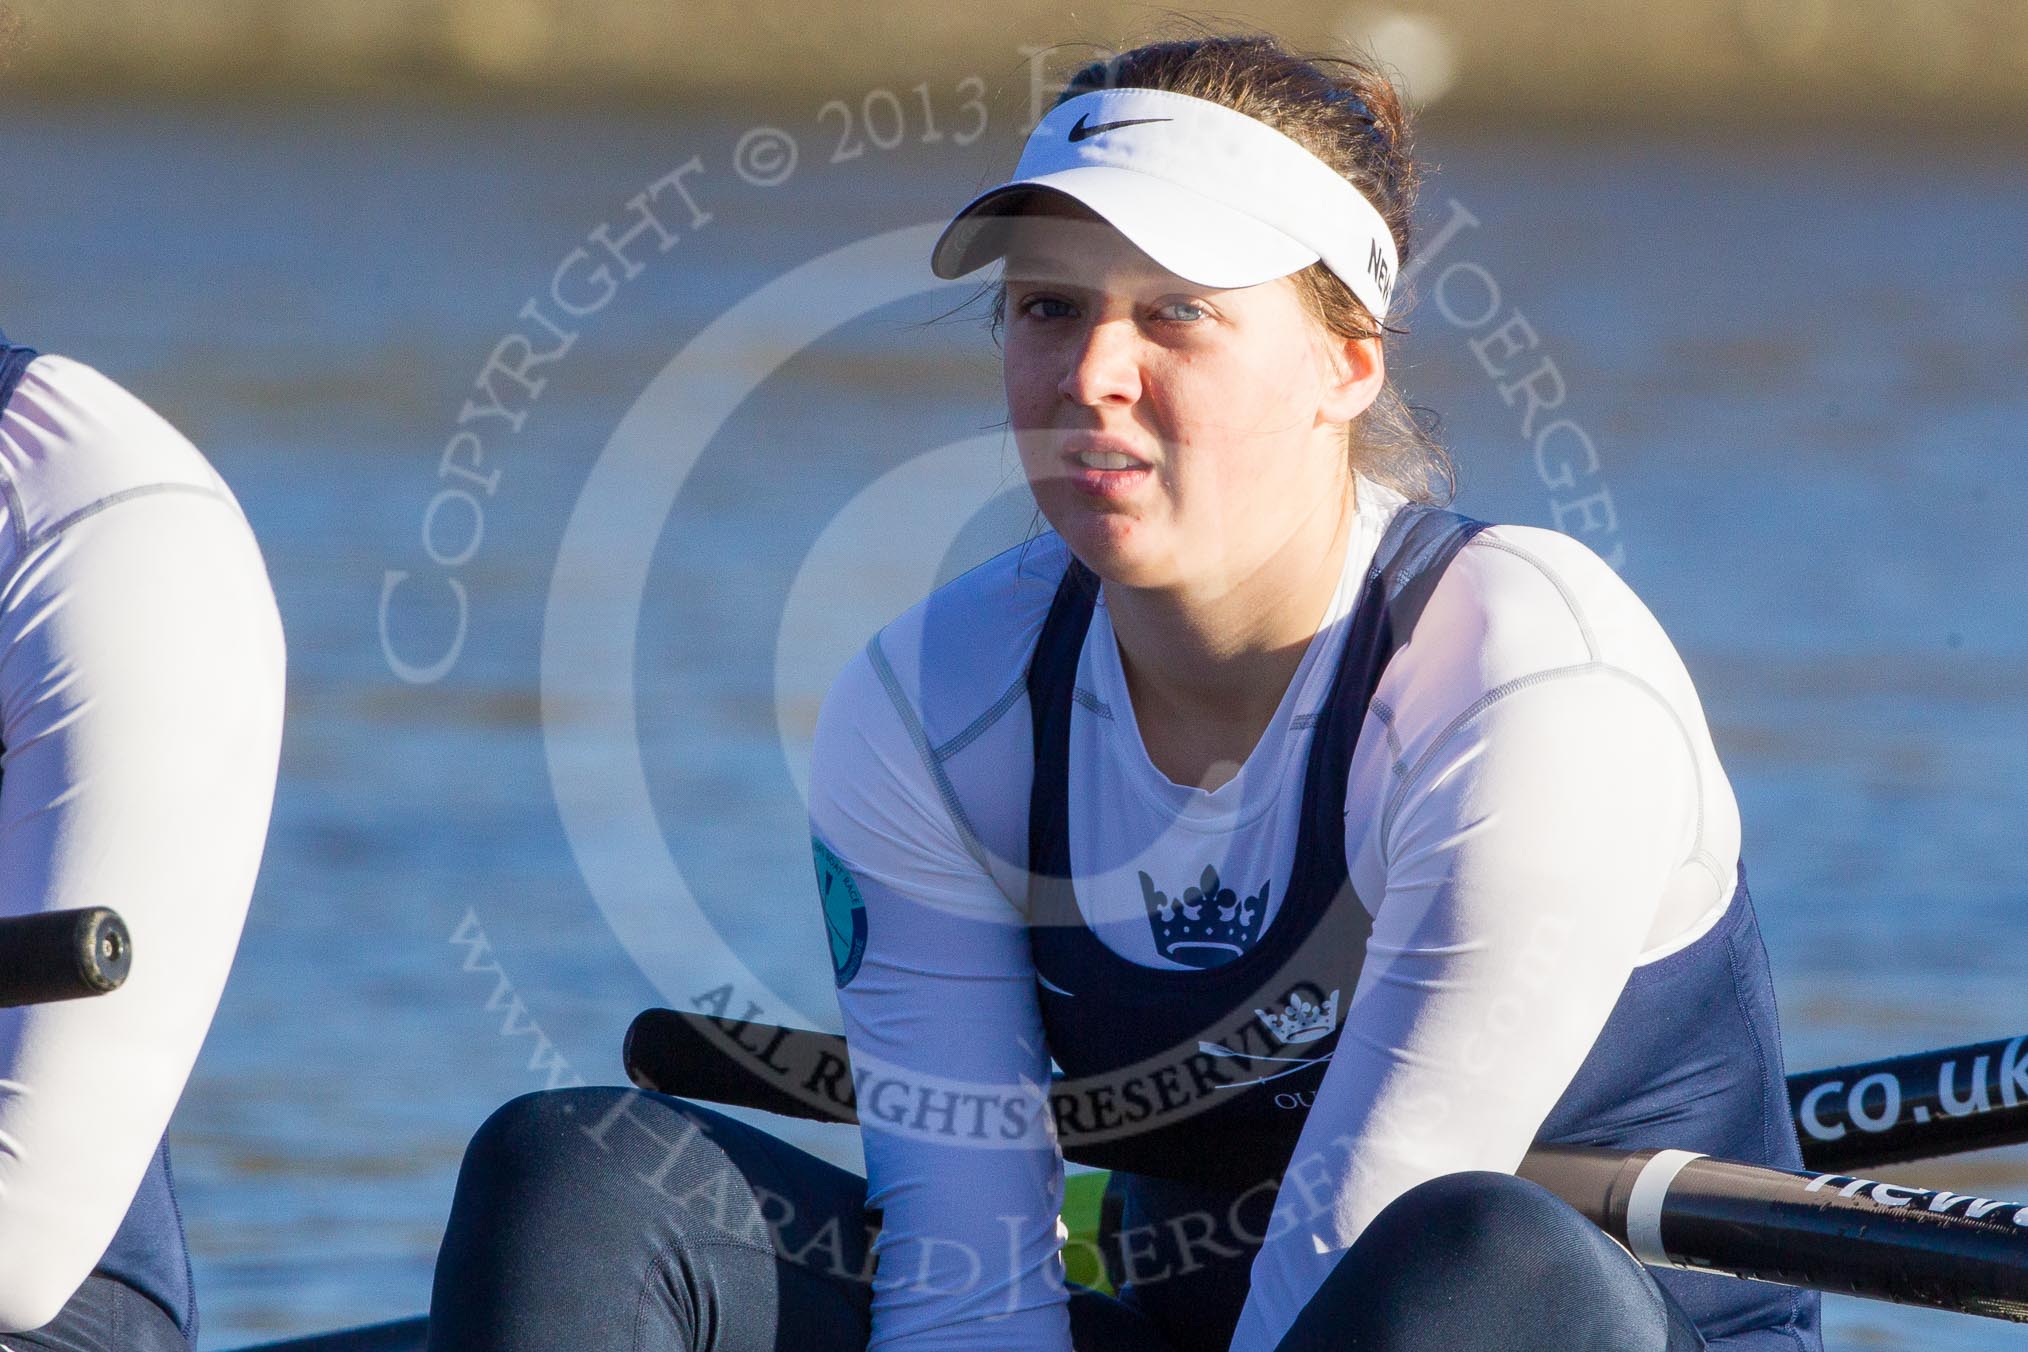 The Boat Race season 2014 - Women's Trial VIIIs (OUWBC, Oxford): Cleopatra: 2 Chloe Farrar..
River Thames between Putney Bridge and Mortlake,
London SW15,

United Kingdom,
on 19 December 2013 at 12:32, image #19